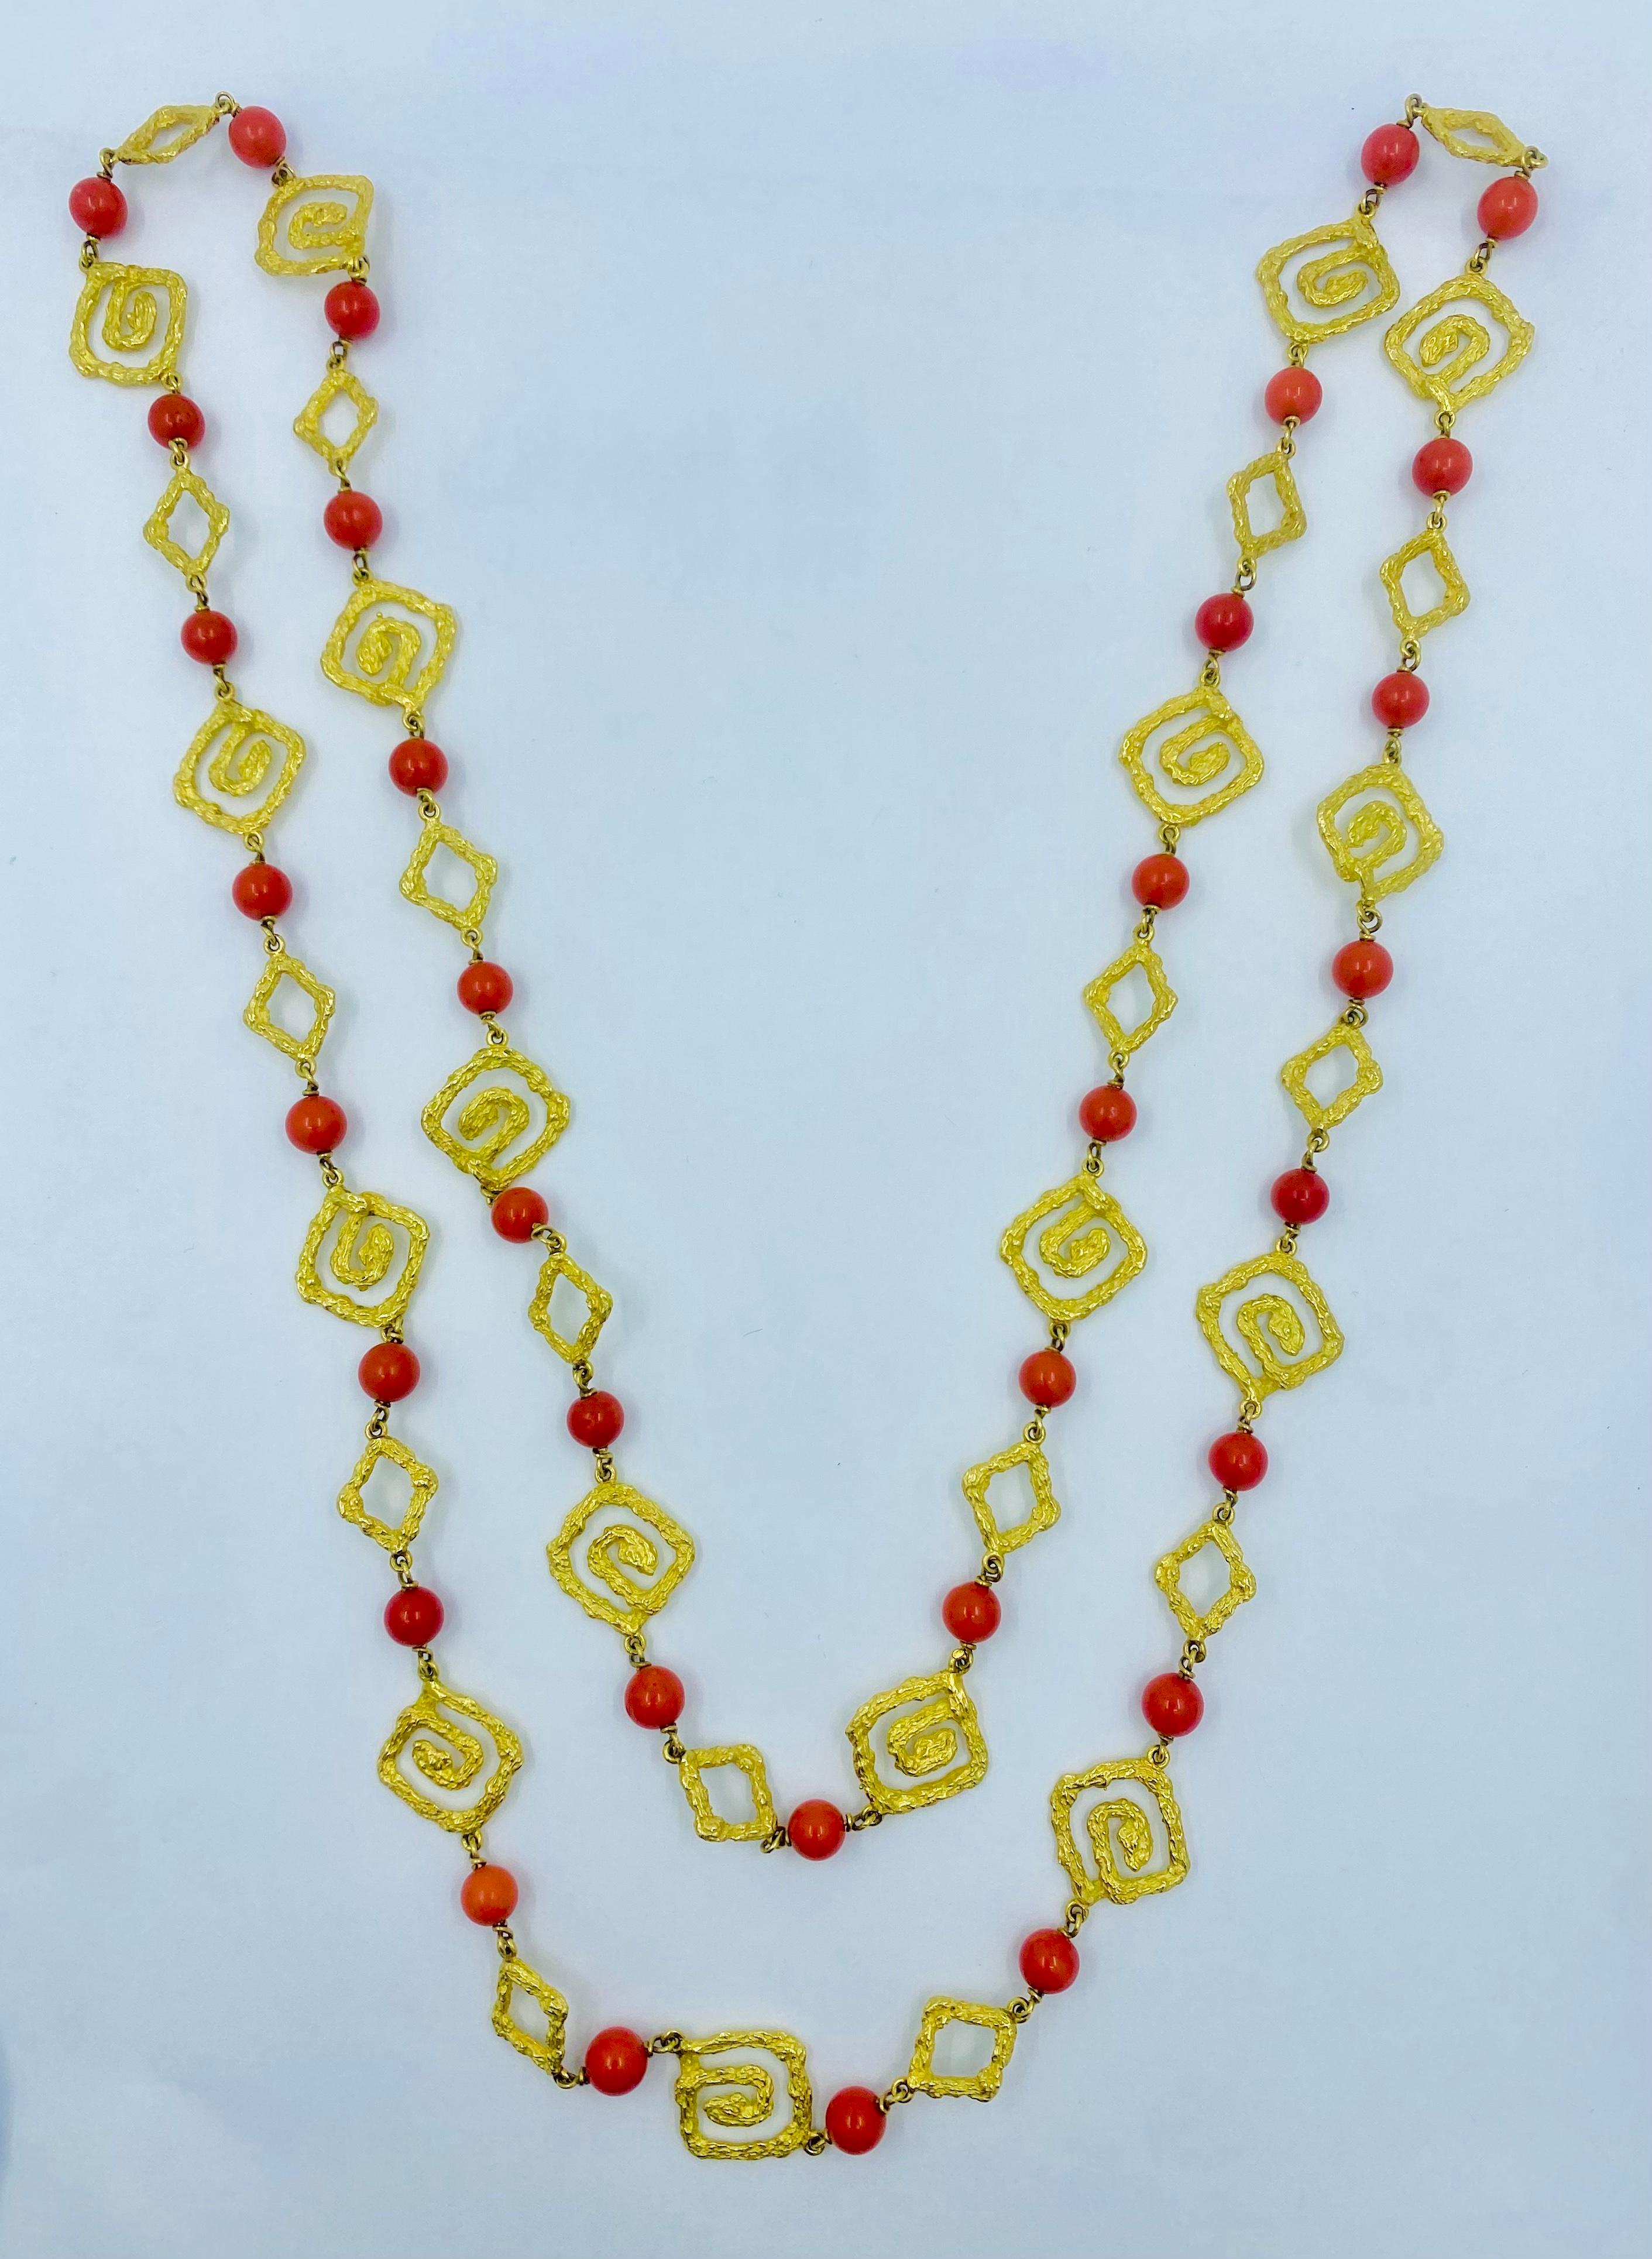 havala chain with pendant